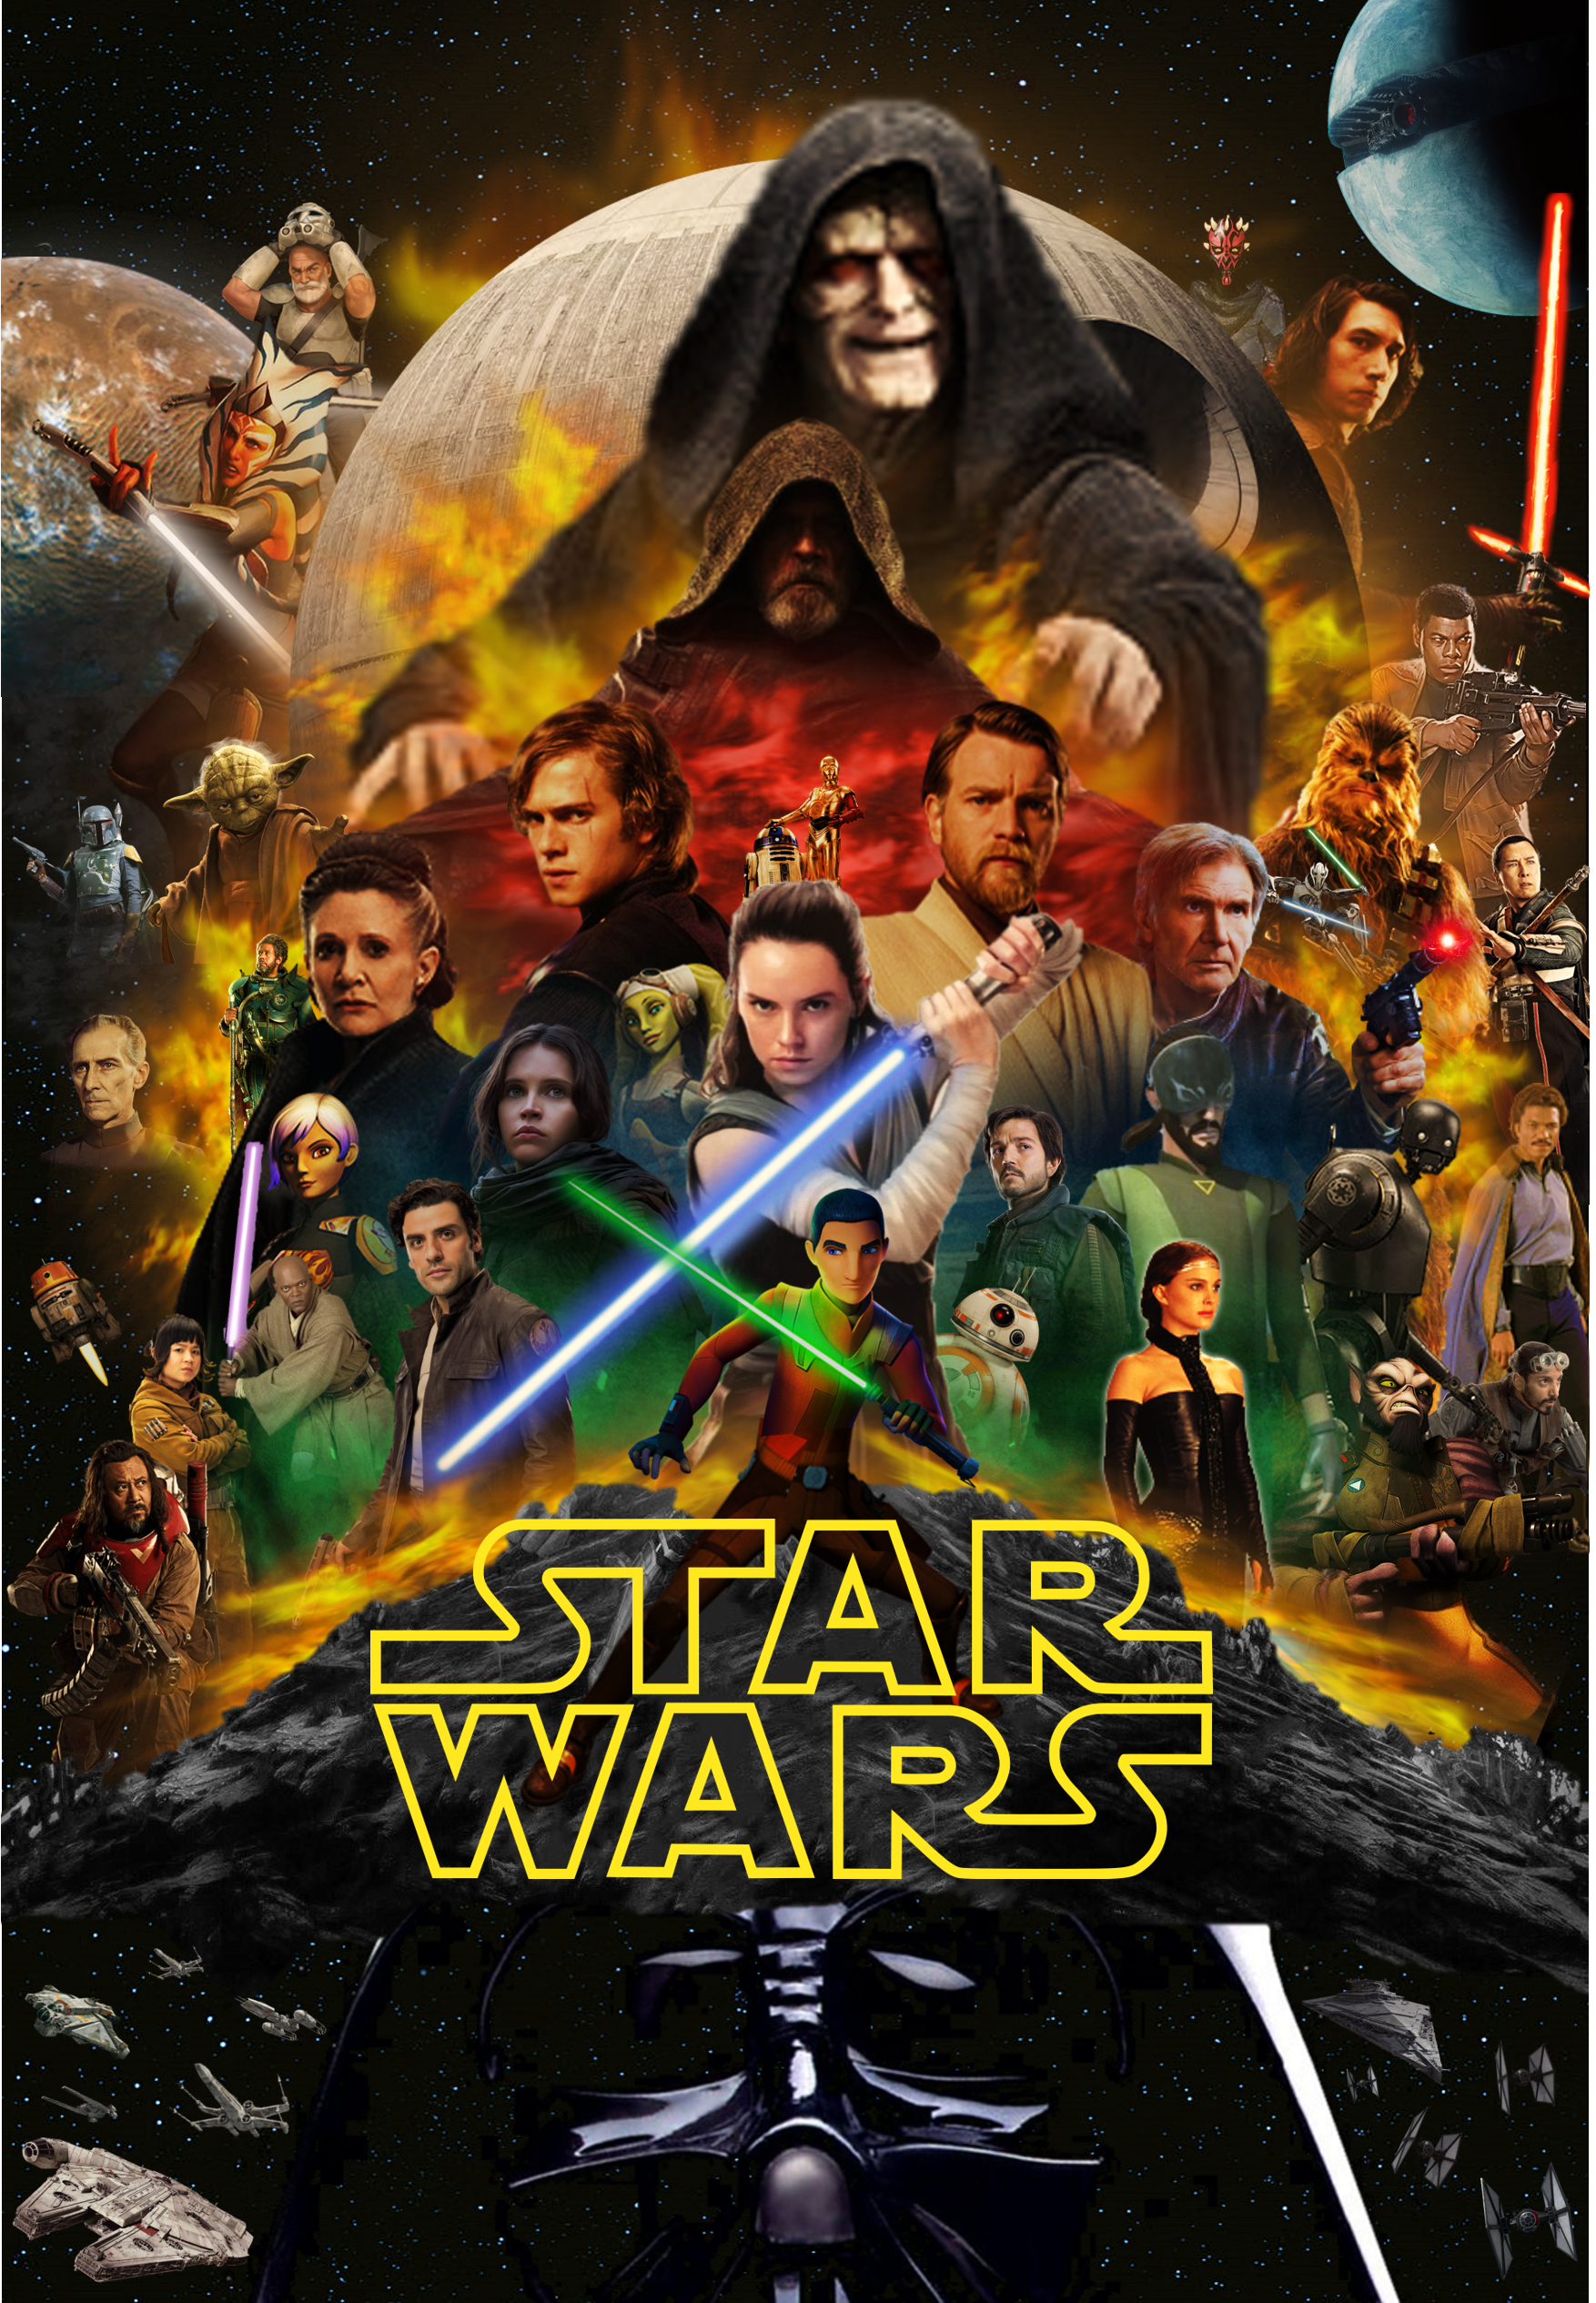 Star Wars Poster (Infinity War Style) by Captain-Kingsman16 on DeviantArt